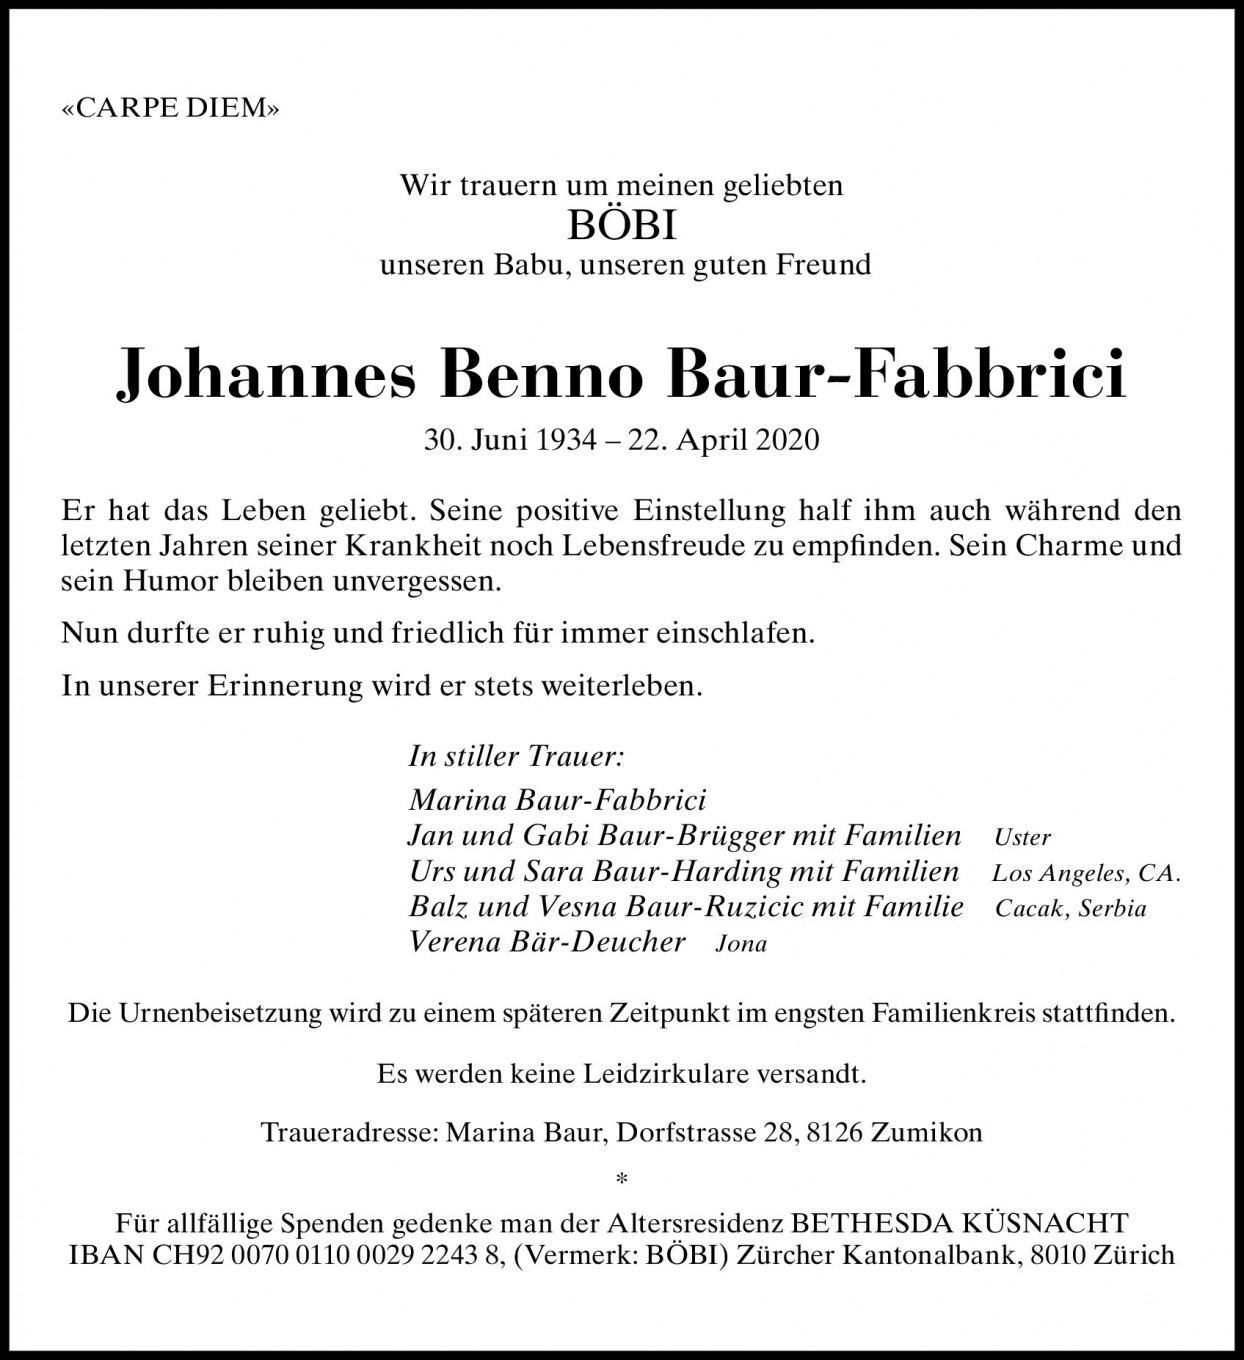 Johannes Benno Baur-Fabbrici